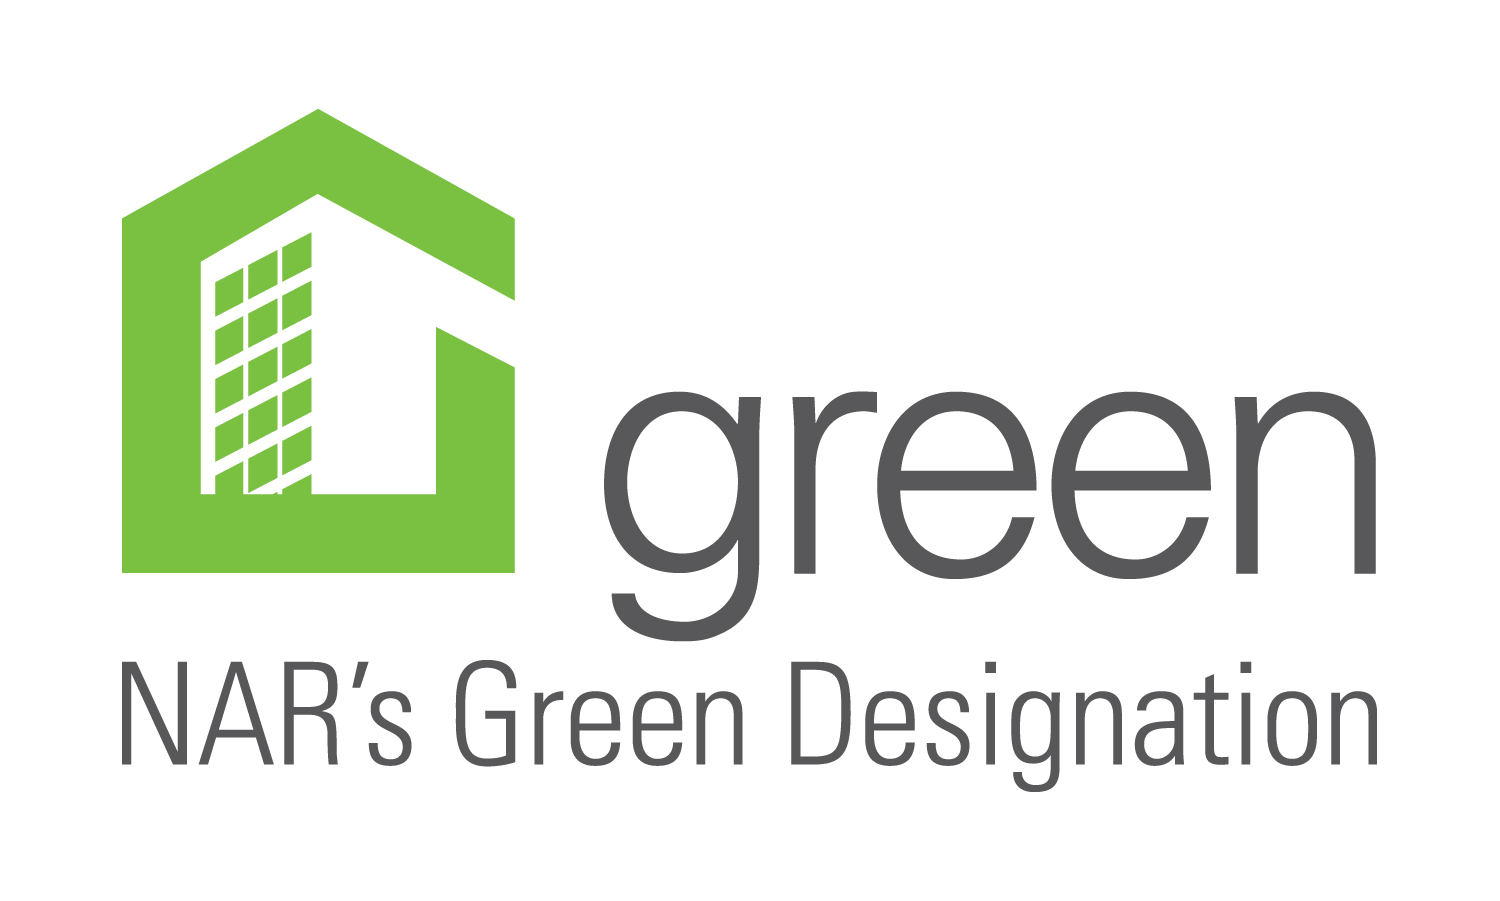 NAR's Green Designation logo